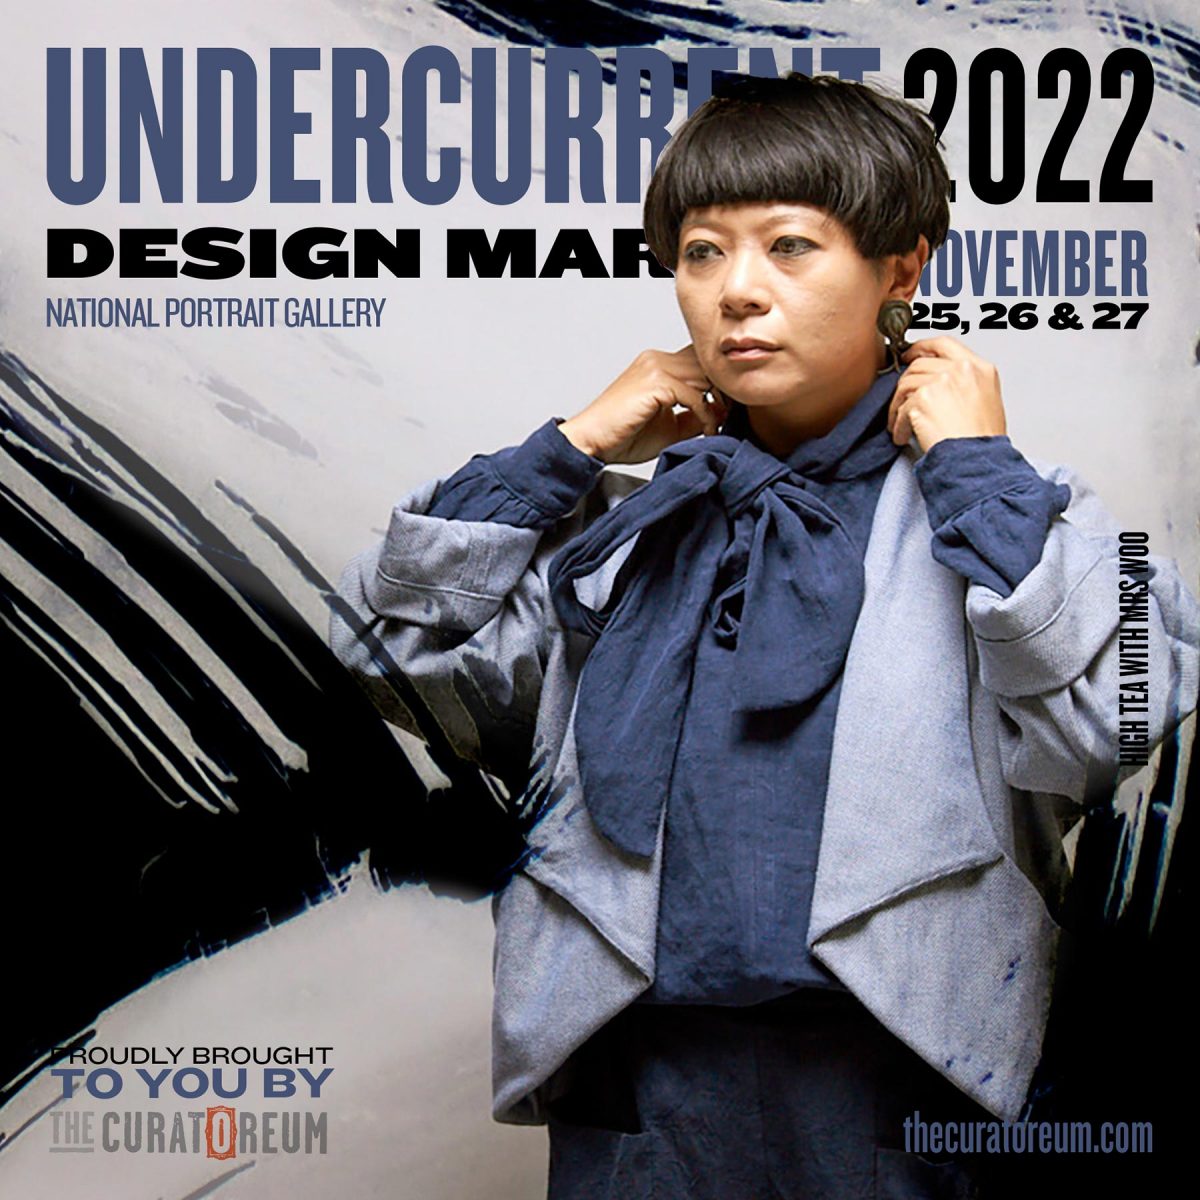 Undercurrent Design Market event poster